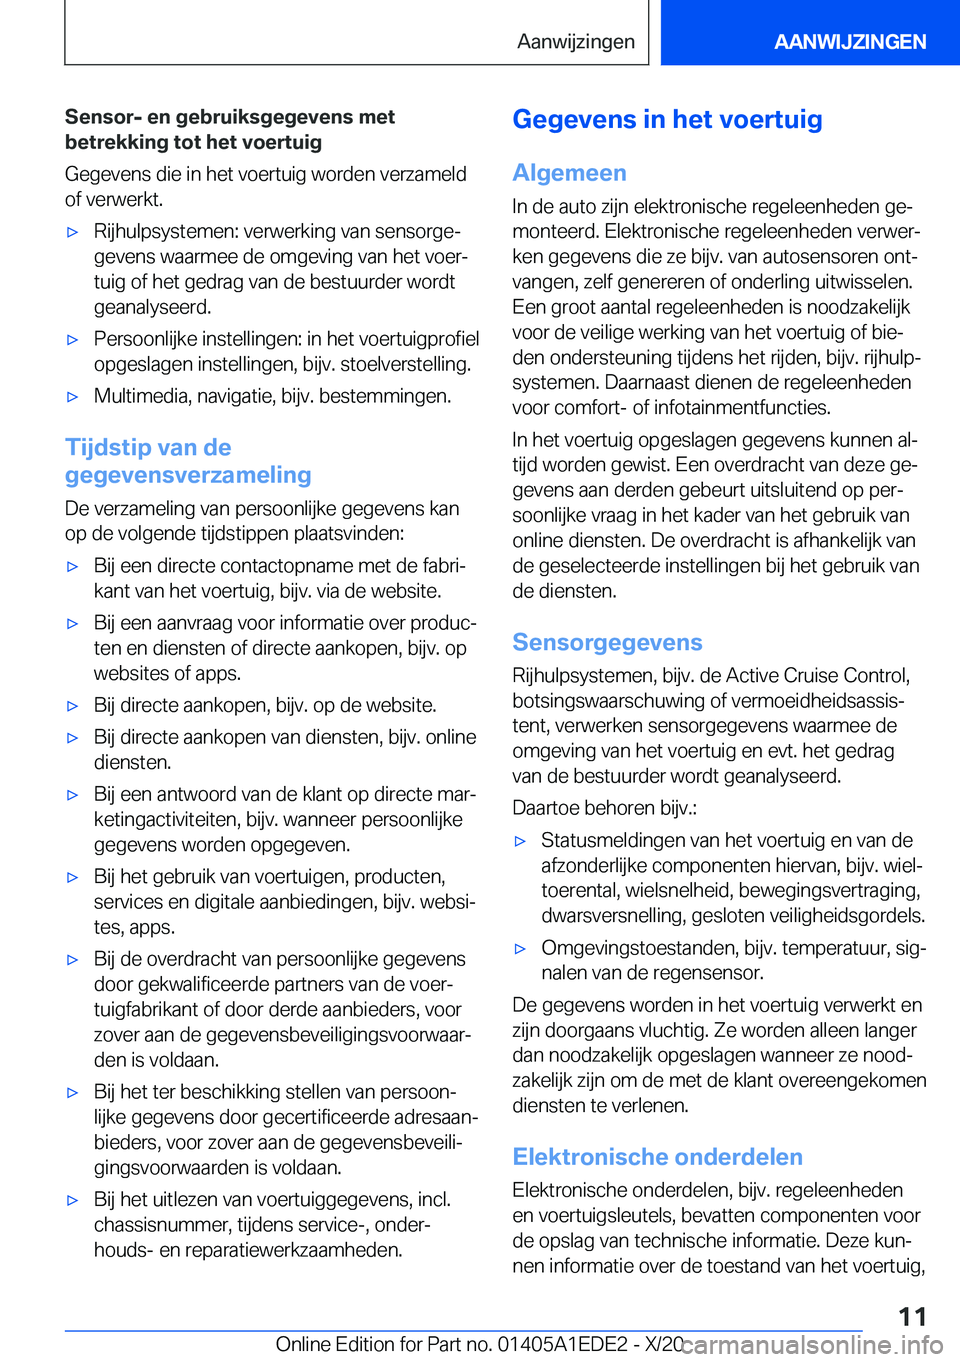 BMW 8 SERIES CONVERTIBLE 2021  Instructieboekjes (in Dutch) �S�e�n�s�o�r�-��e�n��g�e�b�r�u�i�k�s�g�e�g�e�v�e�n�s��m�e�t�b�e�t�r�e�k�k�i�n�g��t�o�t��h�e�t��v�o�e�r�t�u�i�g
�G�e�g�e�v�e�n�s��d�i�e��i�n��h�e�t��v�o�e�r�t�u�i�g��w�o�r�d�e�n��v�e�r�z�a�